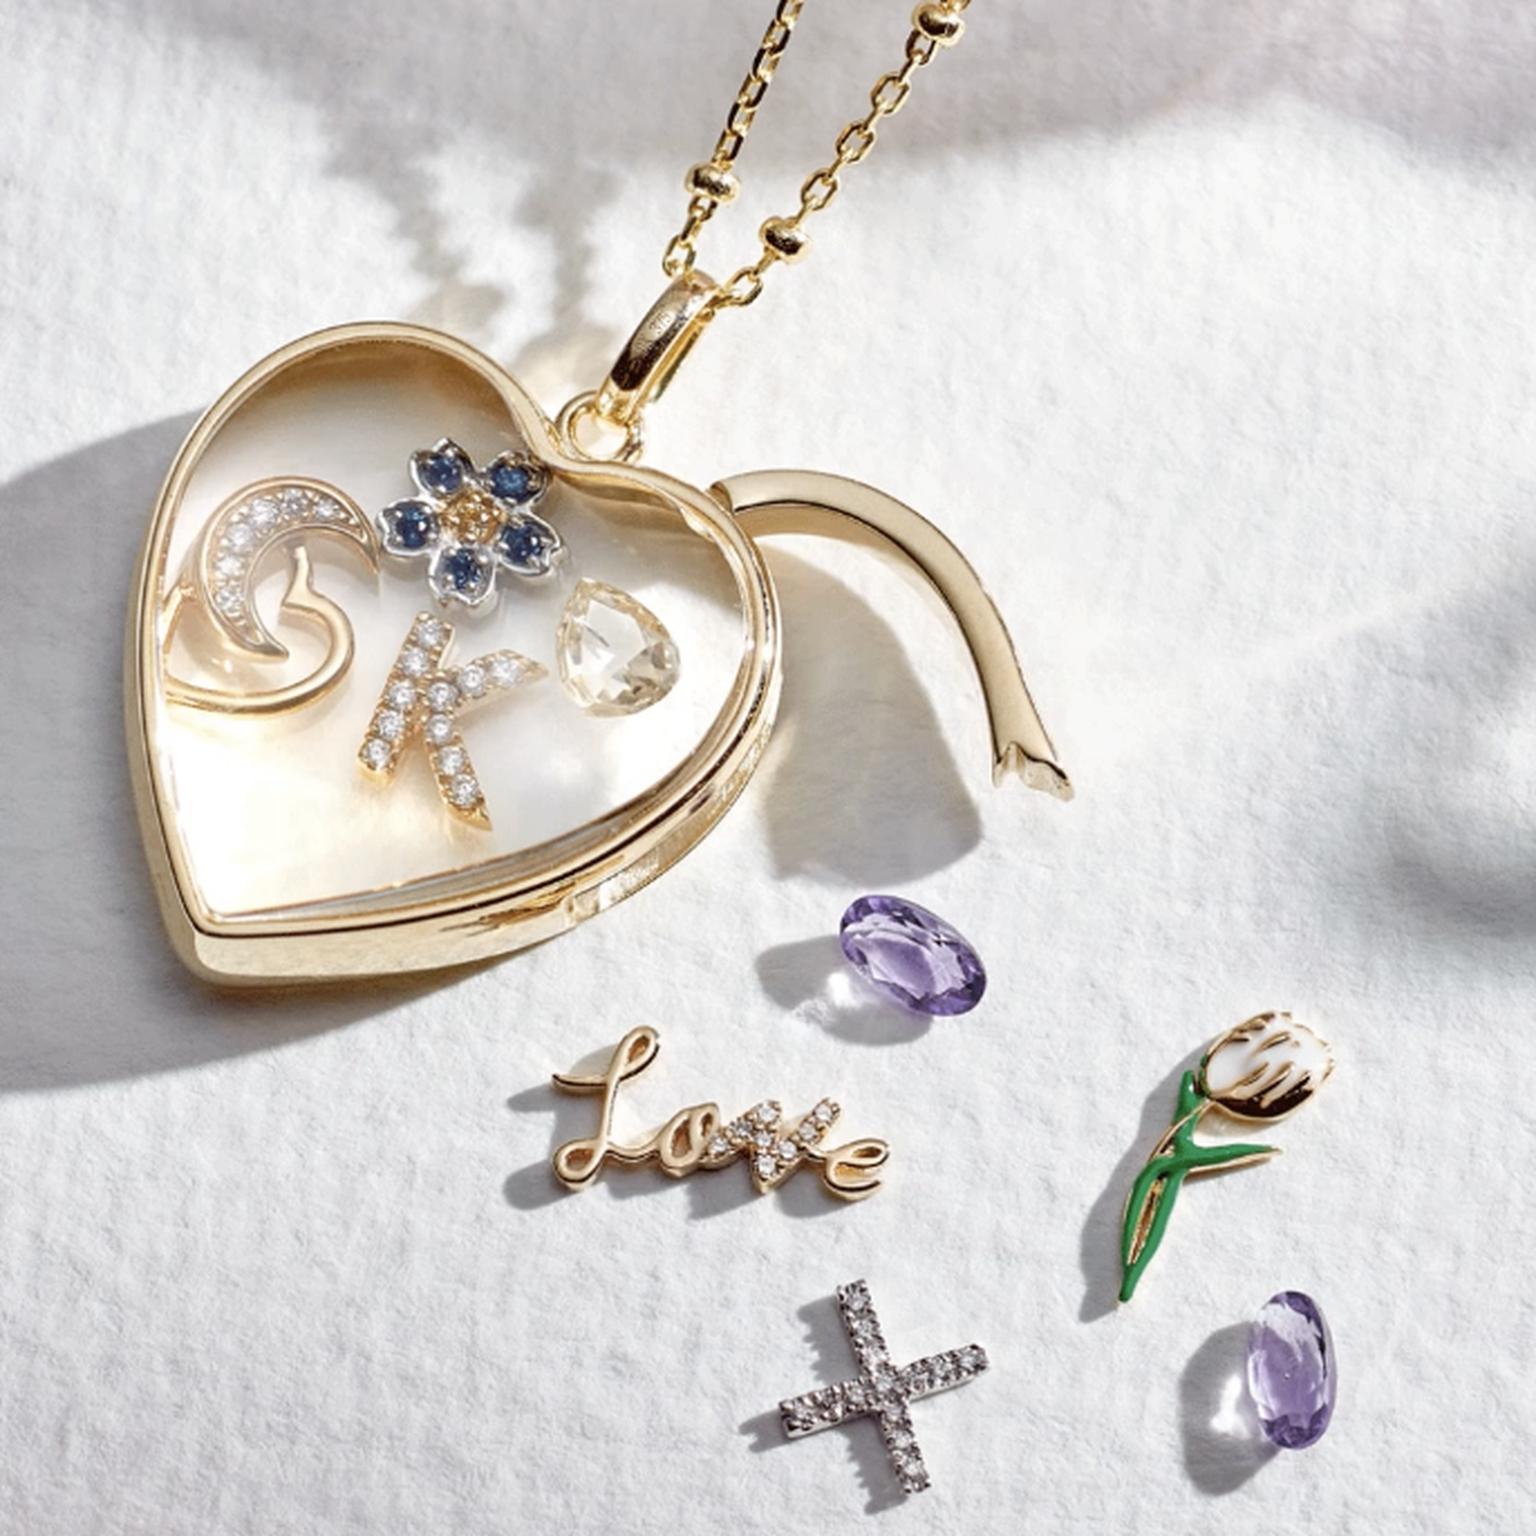 Build your locket love pendant by Loquet